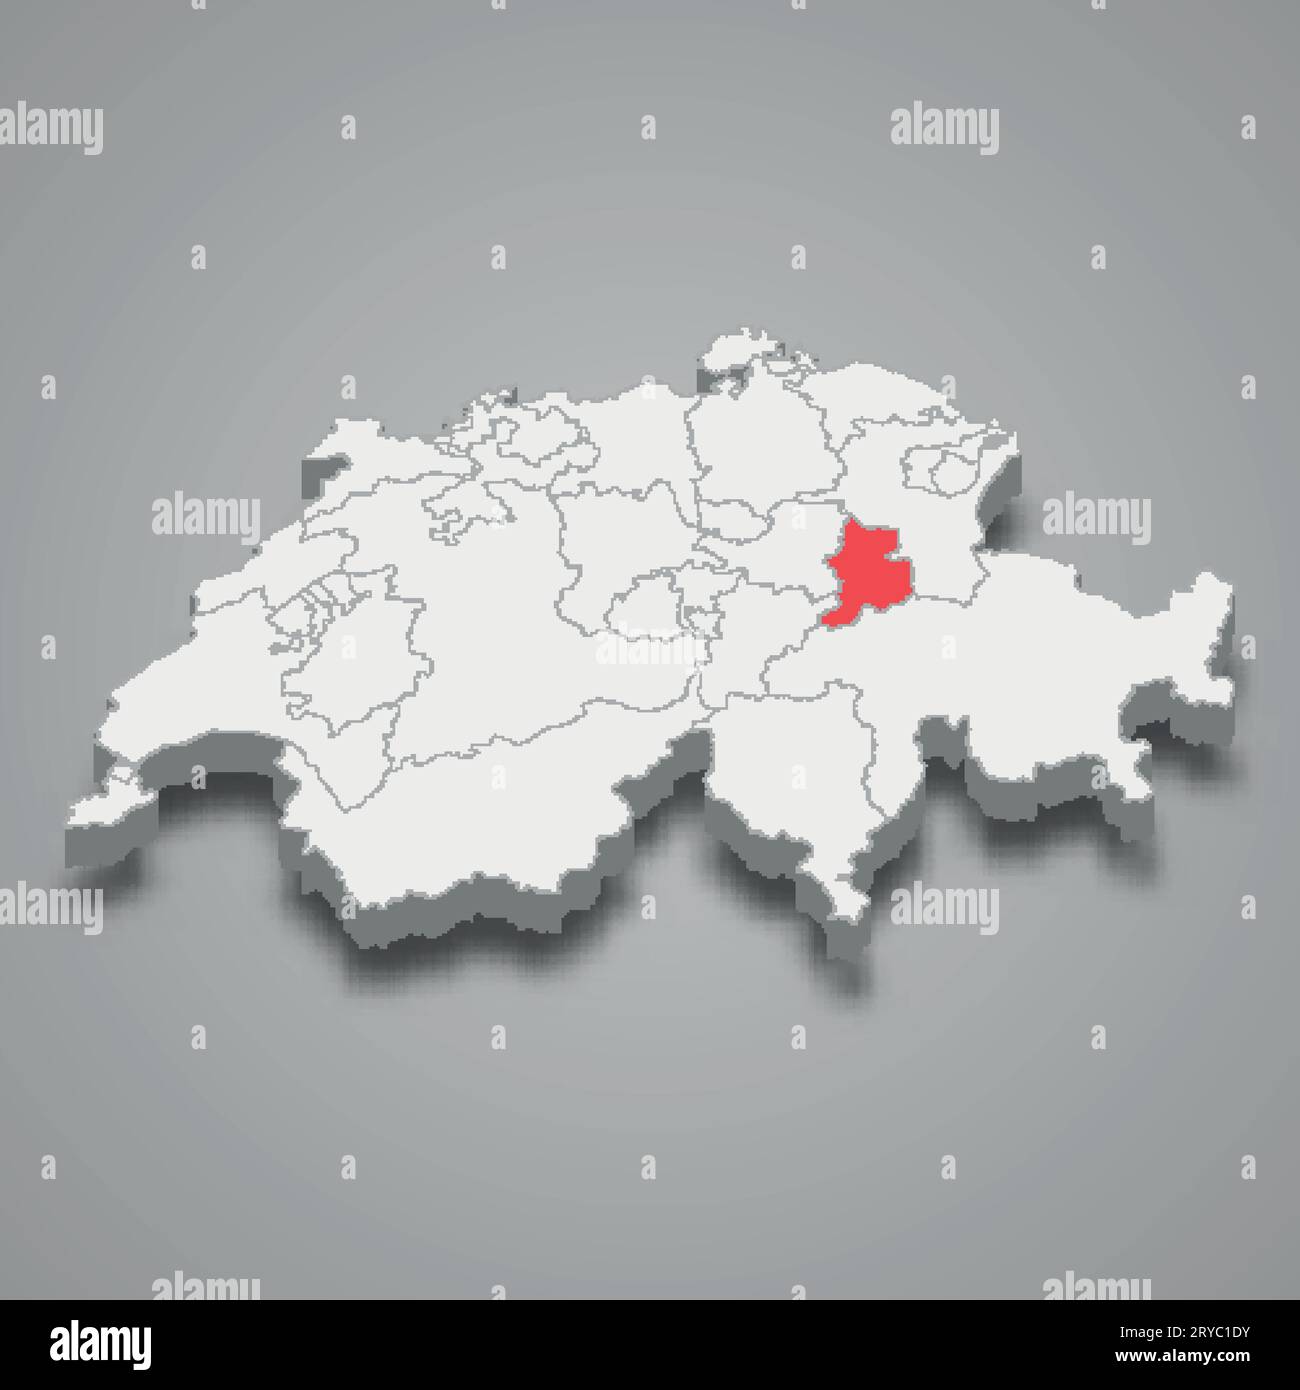 Glarus cantone location within Switzerland 3d isometric map Stock Vector